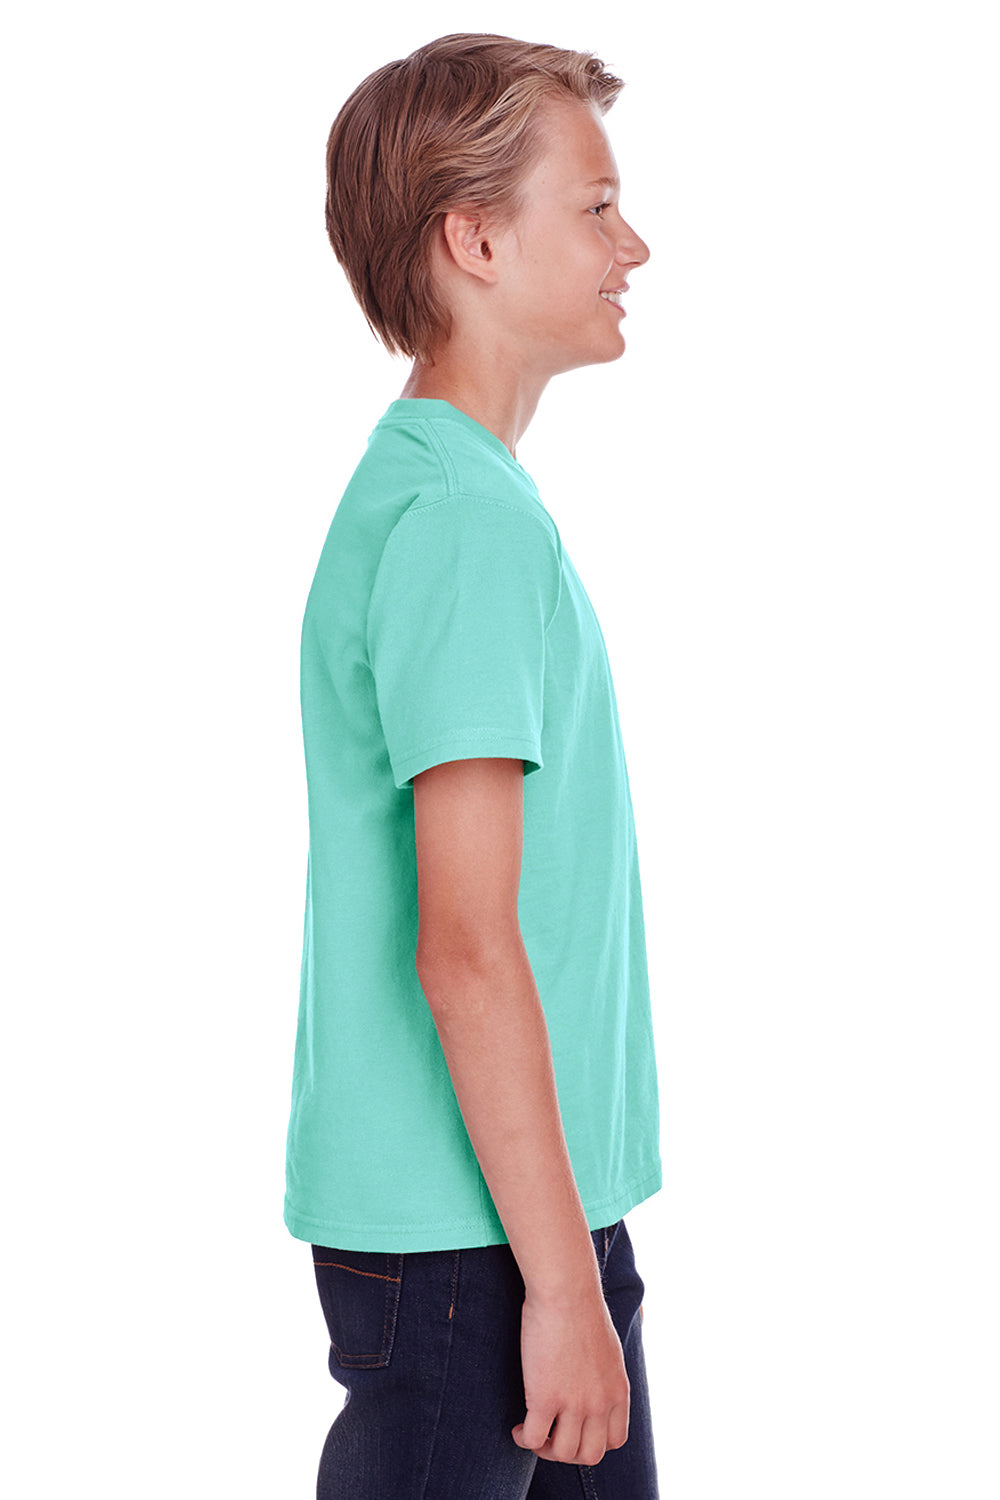 ComfortWash by Hanes GDH175 Youth Short Sleeve Crewneck T-Shirt Mint Green Side